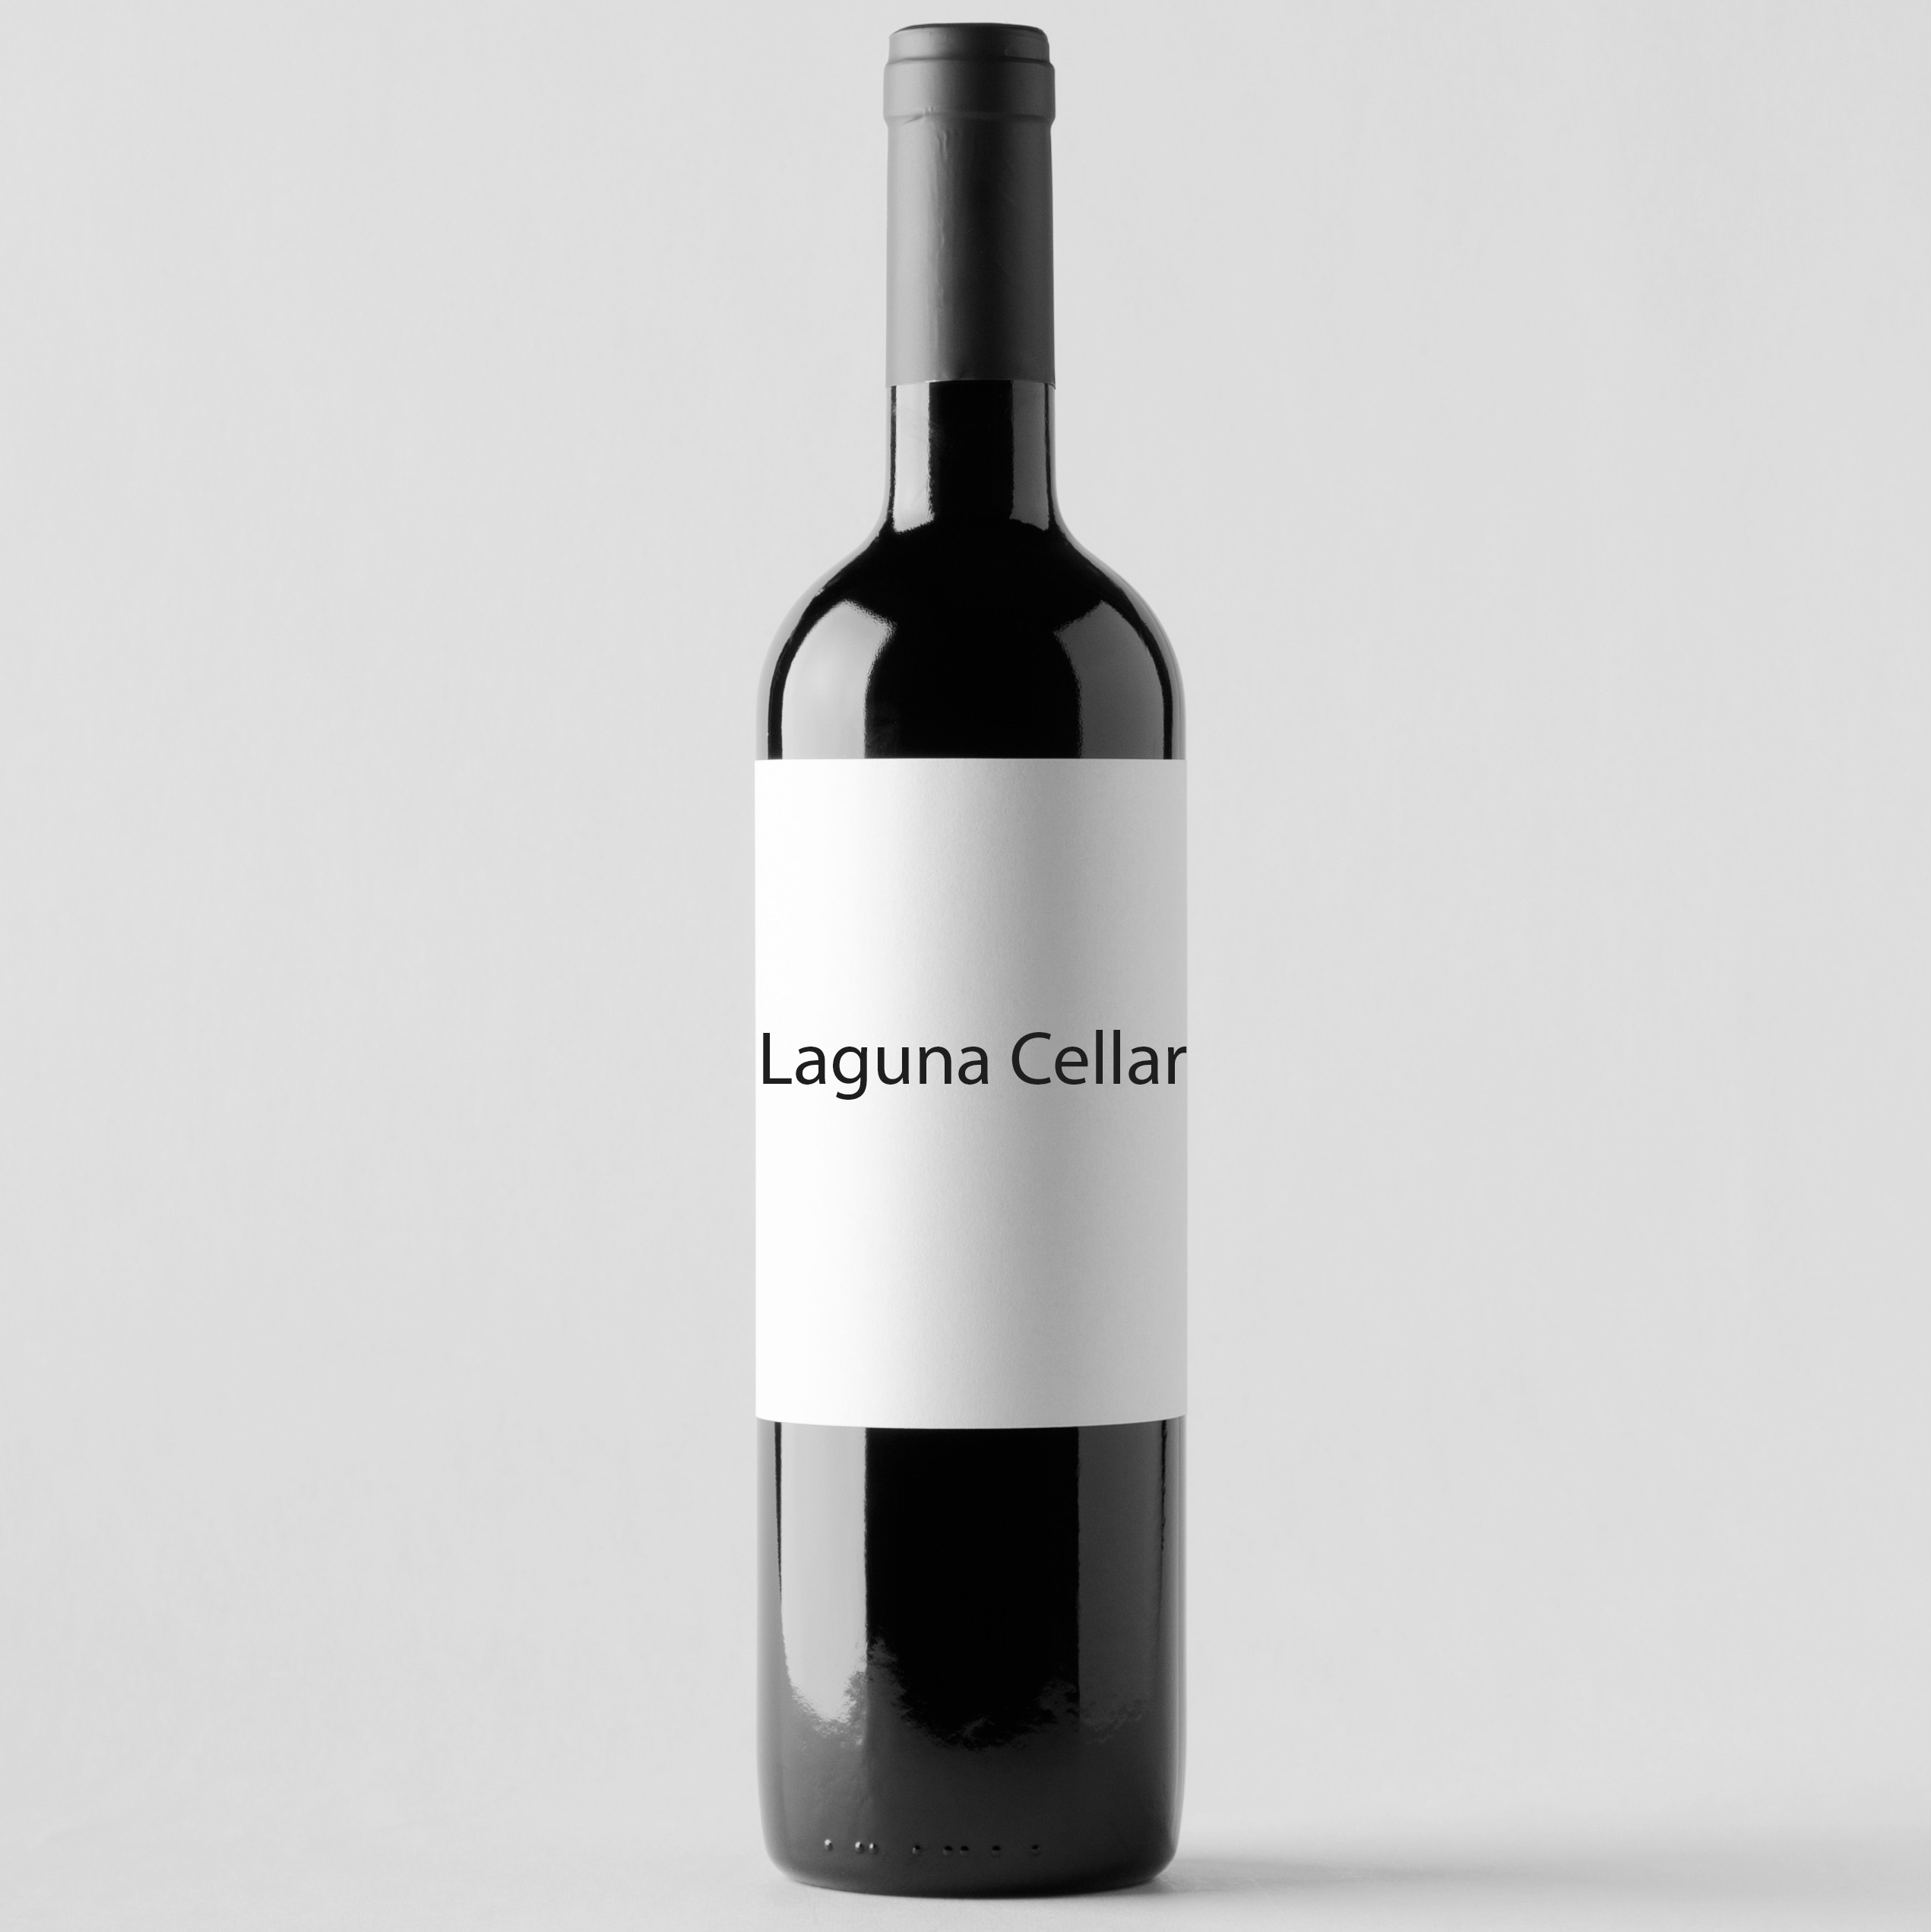 Laguna Cellar featuring Leoville Poyferre